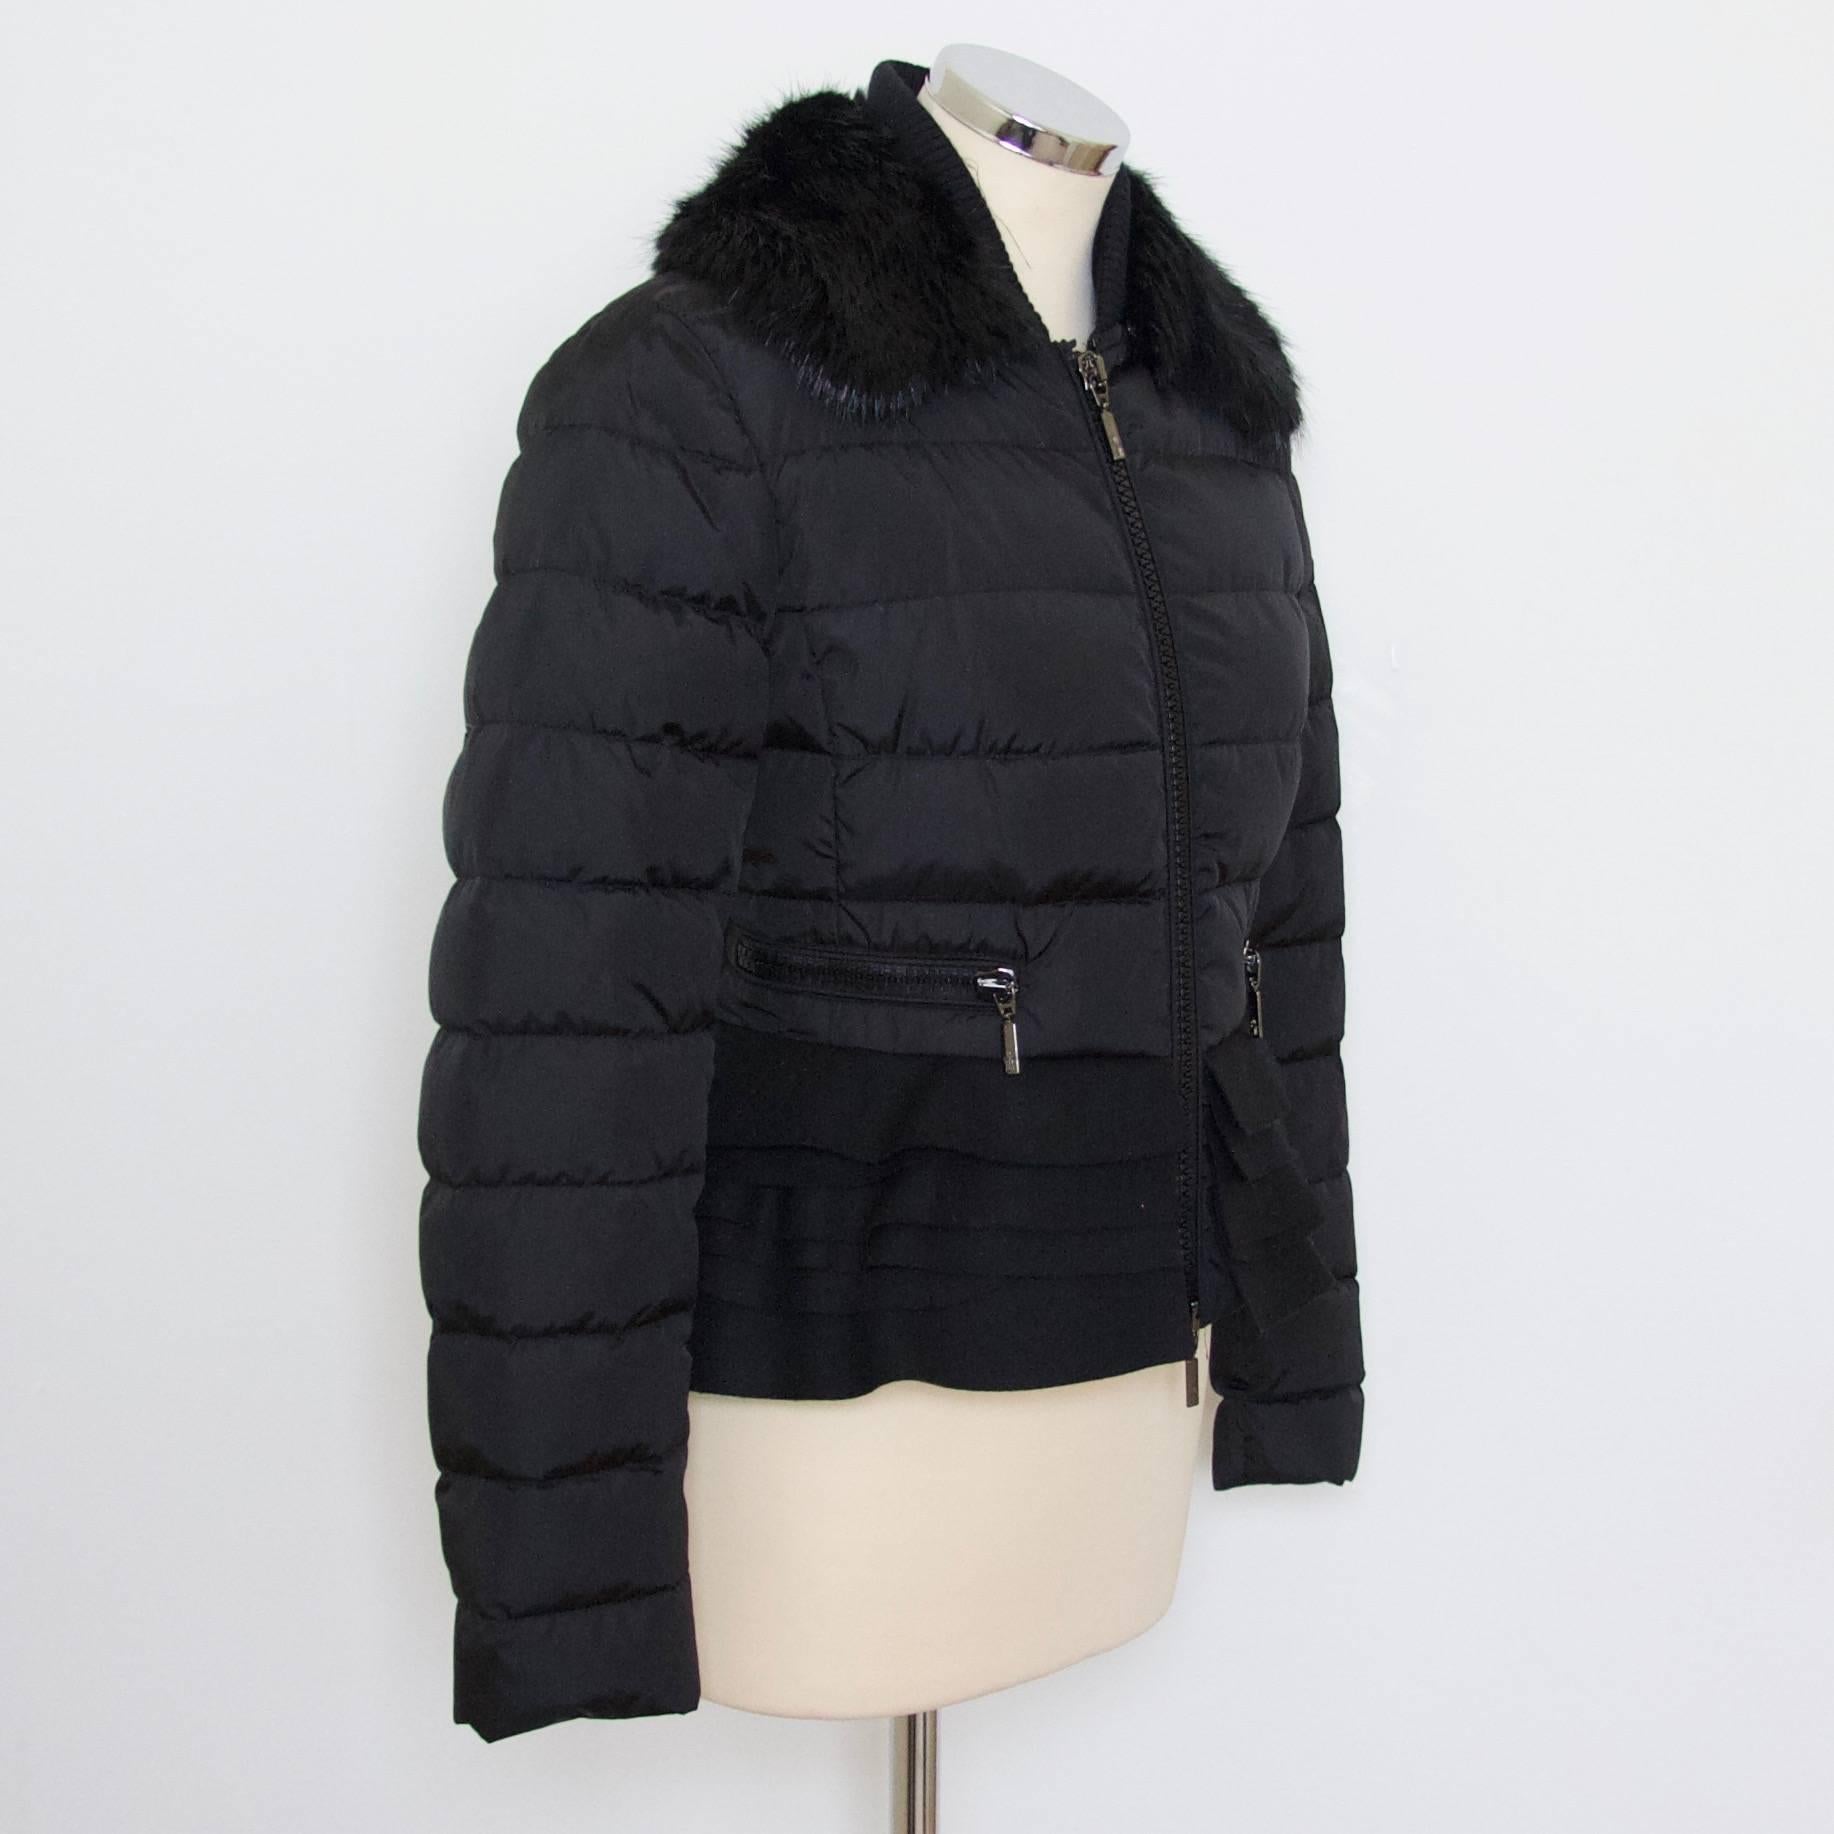 Moncler black ski jacket with detachable black beaver collar.

Also features a felted peplum waist detail.  